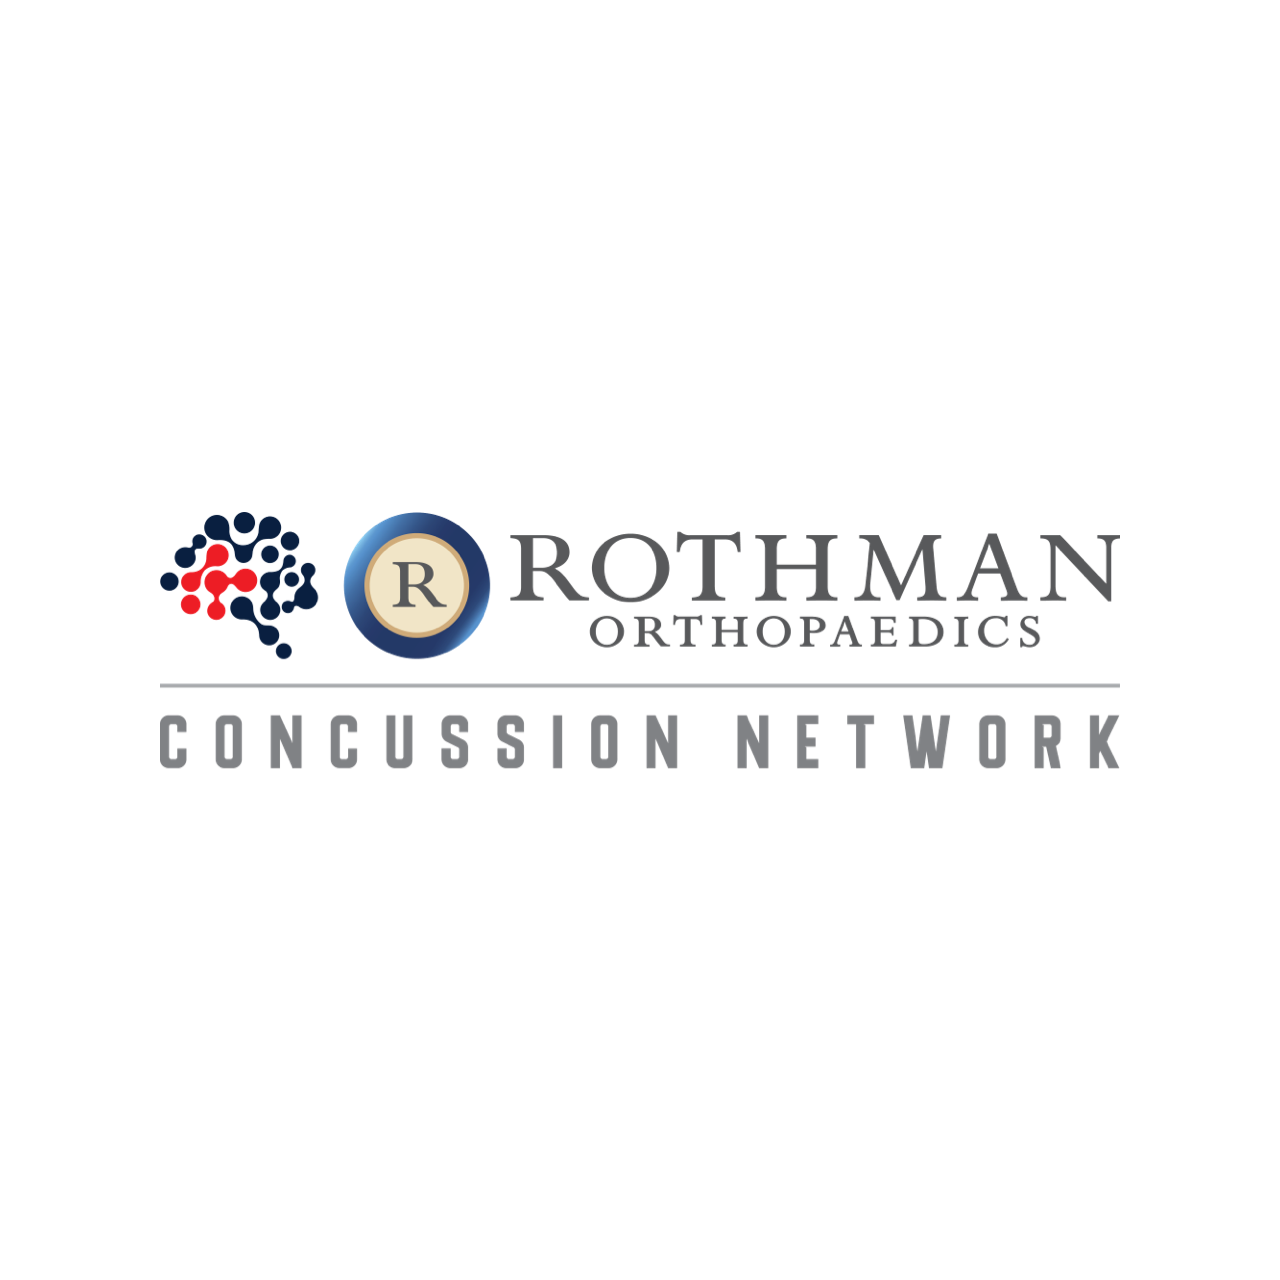 Rothman Orthopaedics Concussion Network